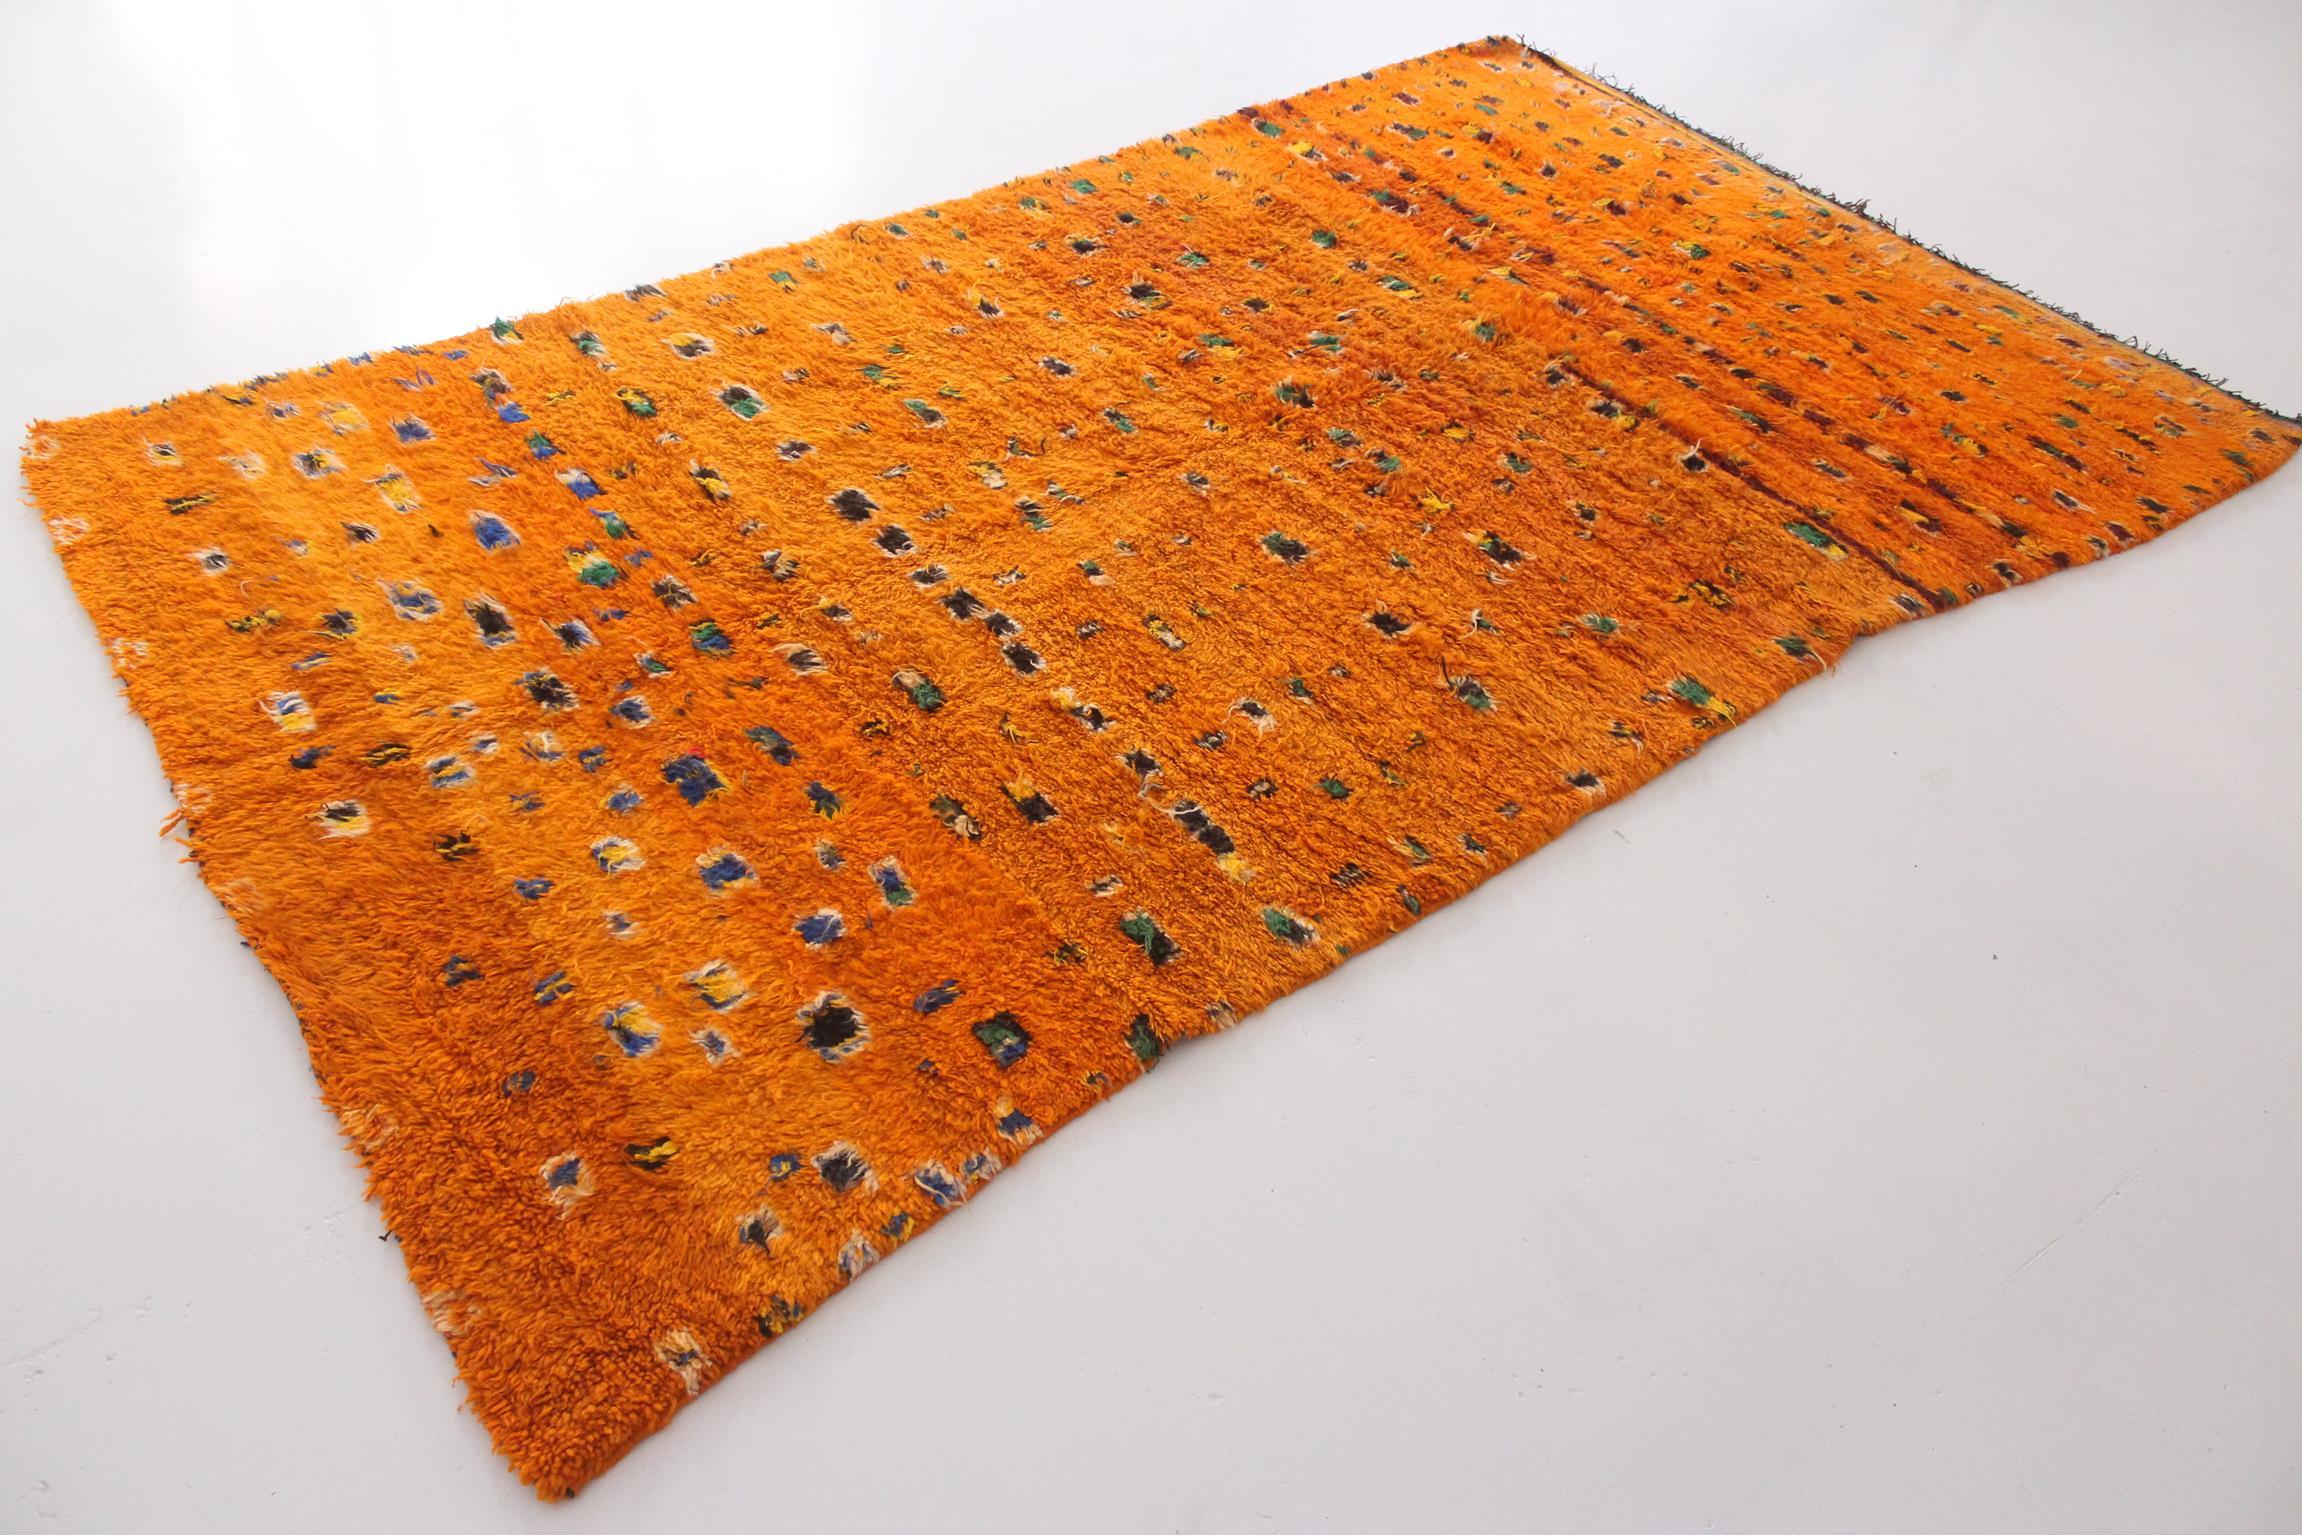 Vintage Moroccan wool rug - Orange - 6.5x10.5feet / 198x320cm For Sale 5